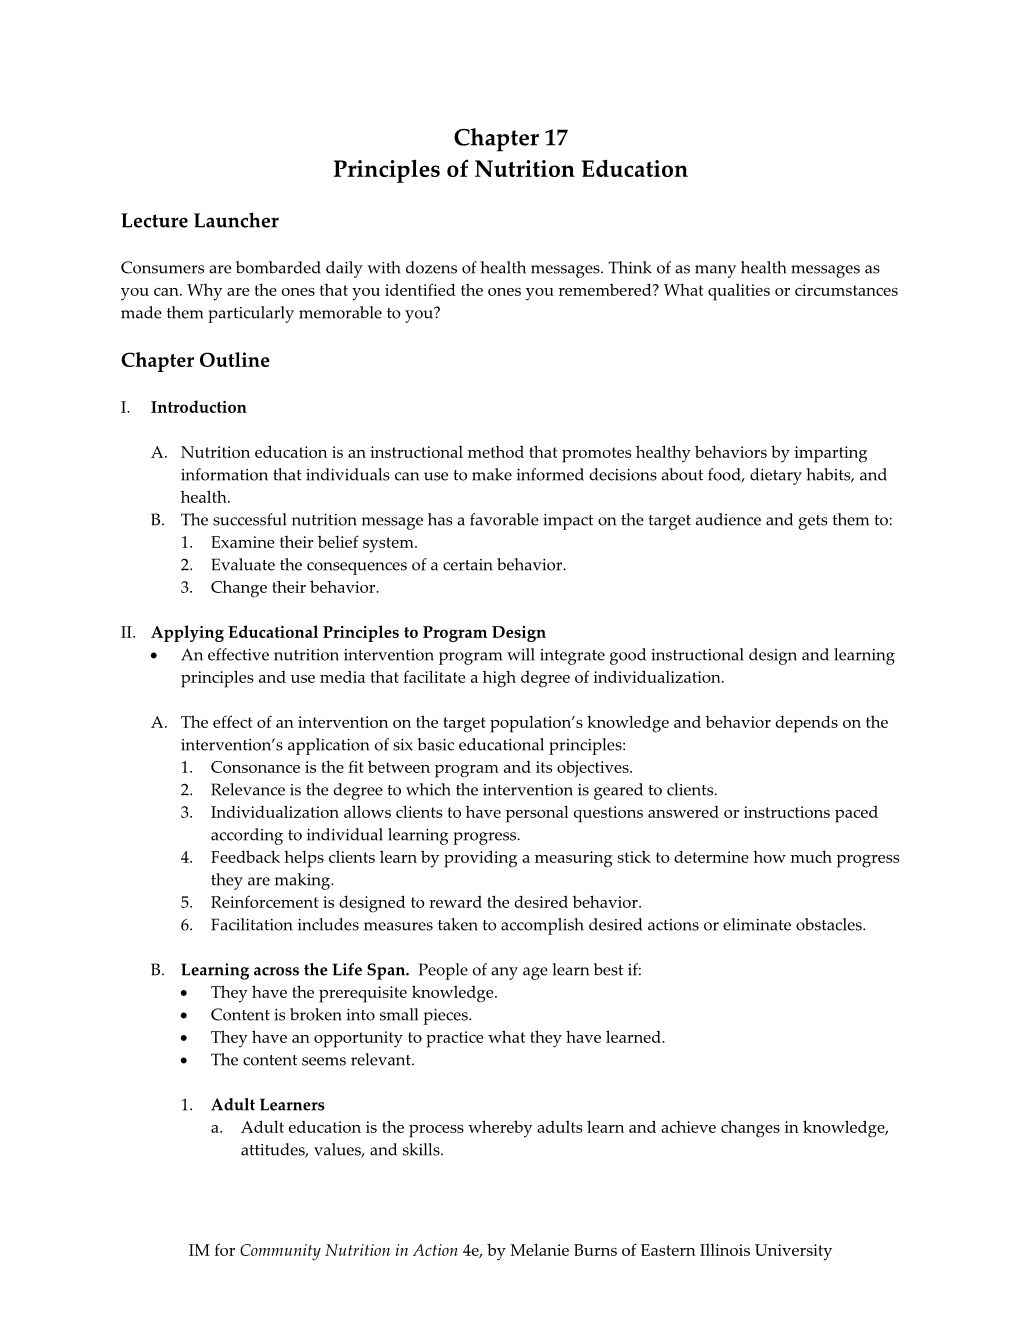 Principles of Nutrition Education